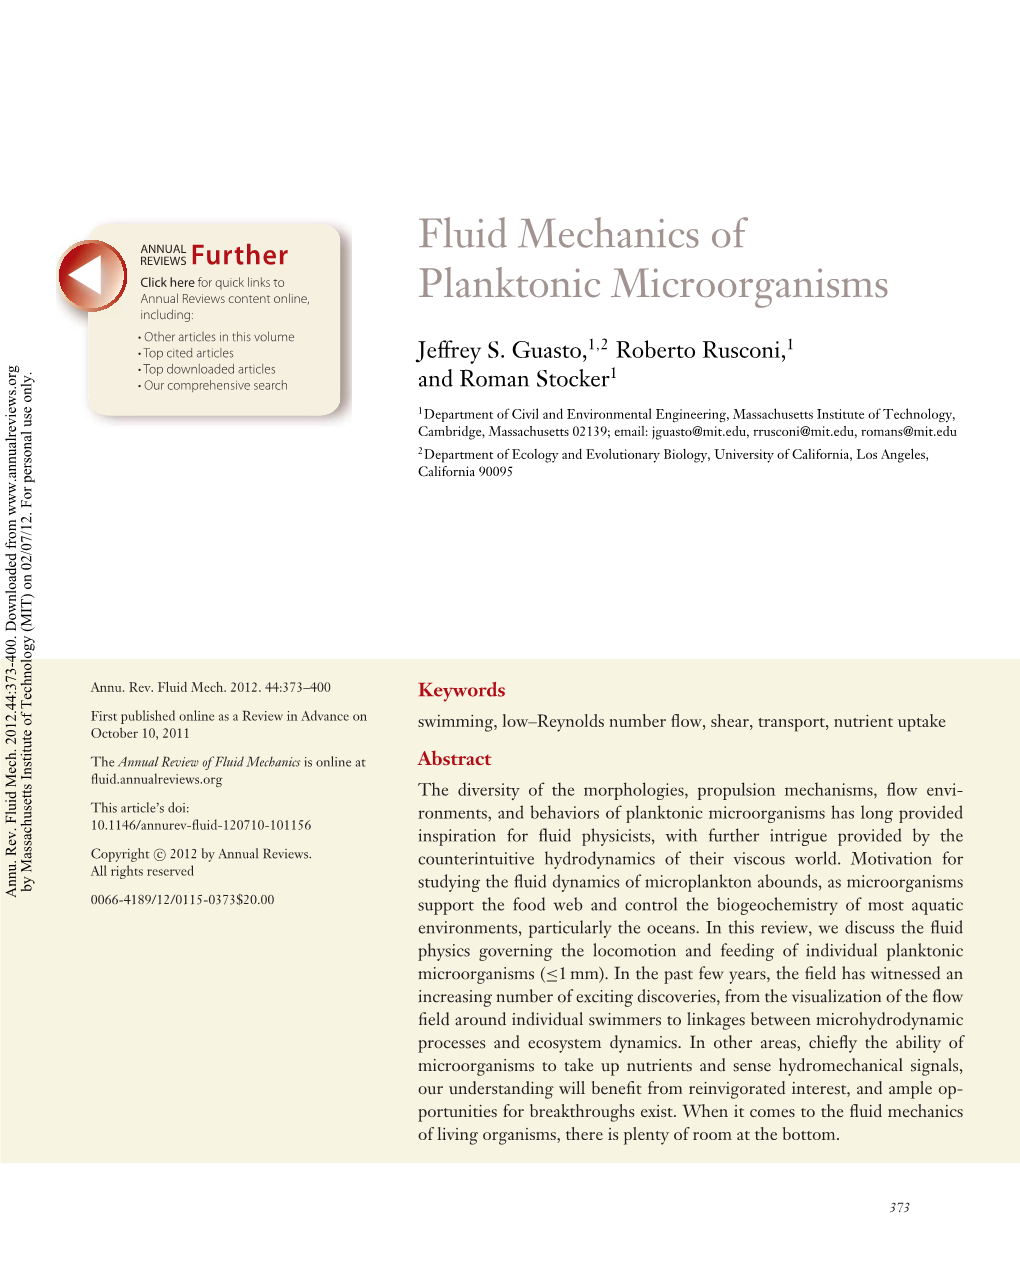 Fluid Mechanics of Planktonic Microorganisms